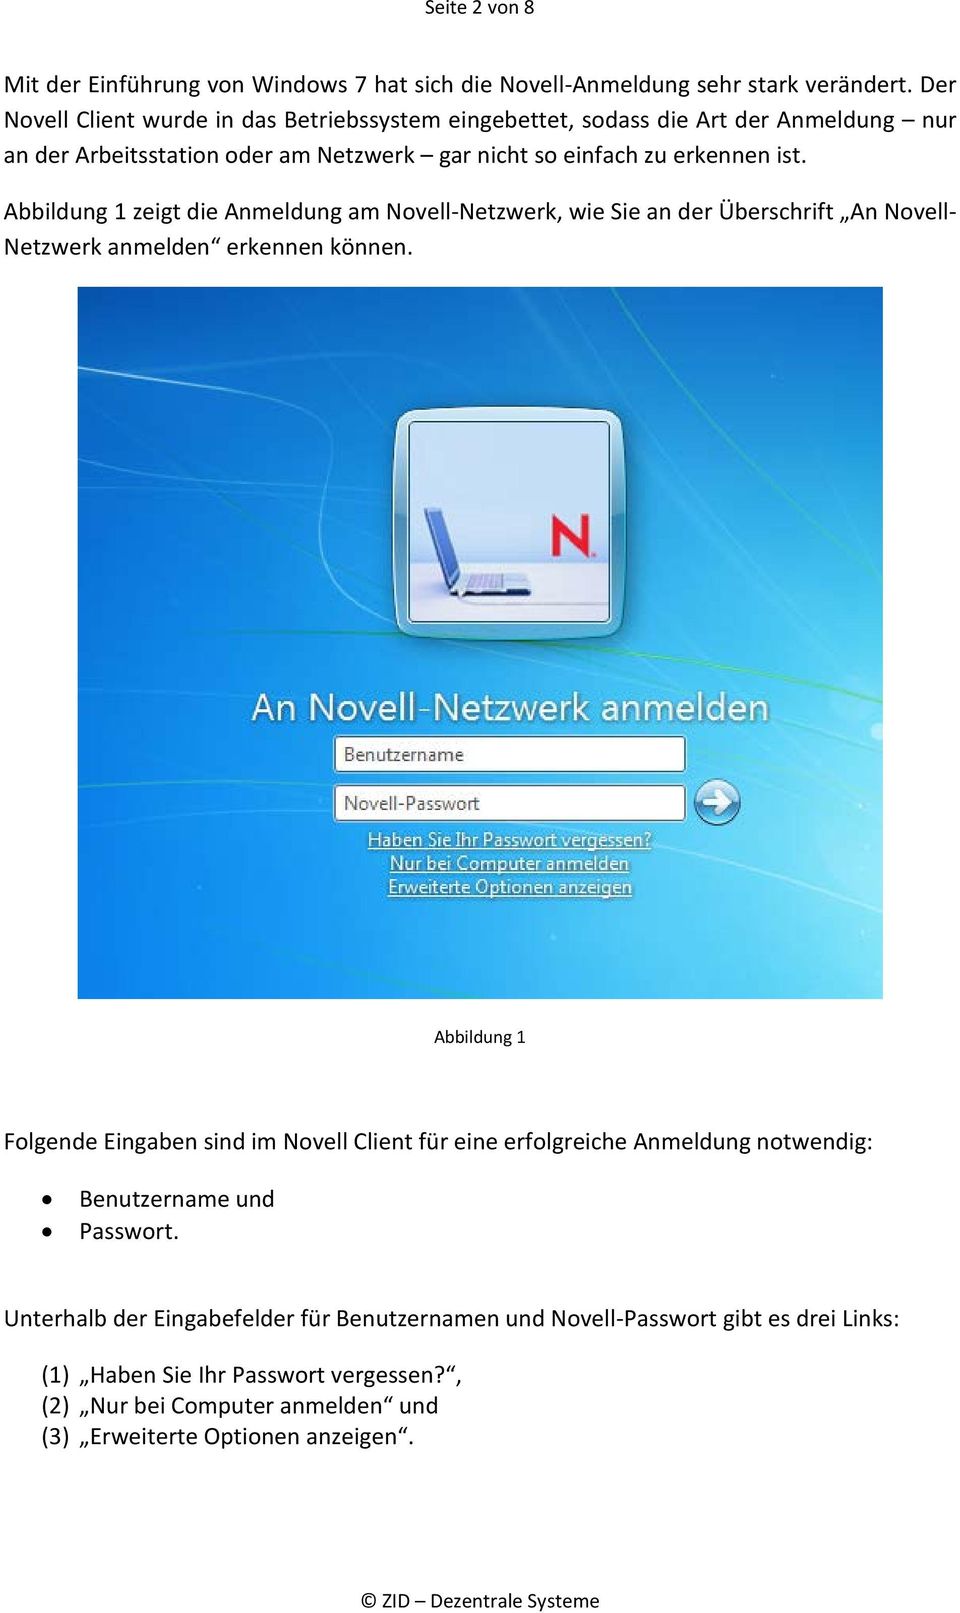 Abbildung 1 zeigt die Anmeldung am Novell-Netzwerk, wie Sie an der Überschrift An Novell- Netzwerk anmelden erkennen können.